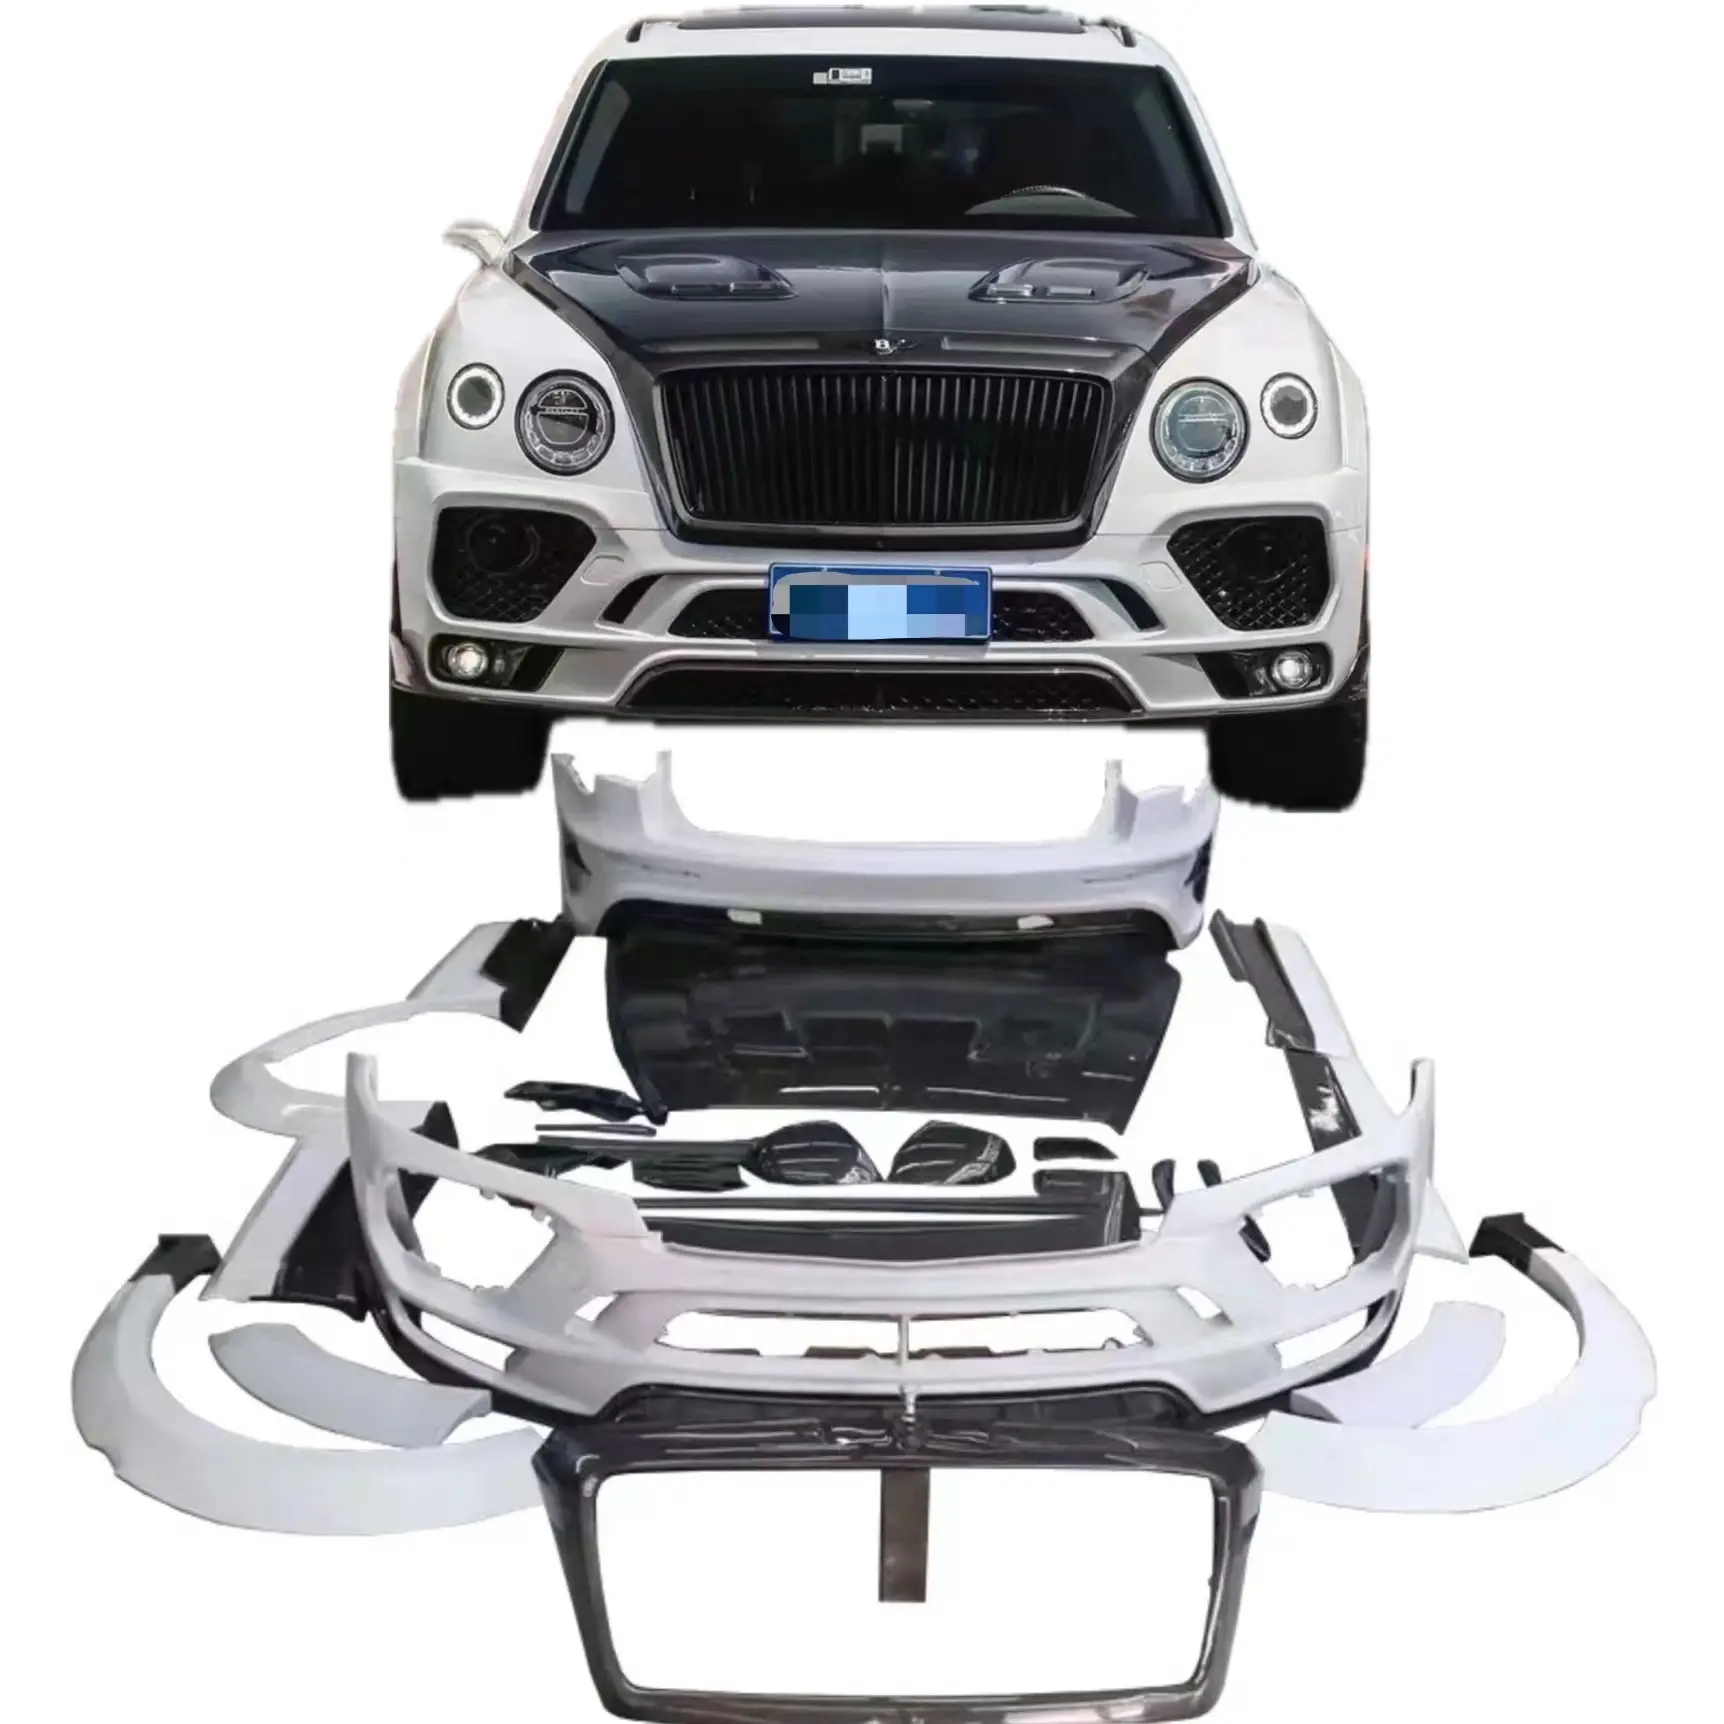 Body Kit M Style für Bentley Bentayga Carbon Fiber Mix Fiberglas Wide Bumper Motorhaube Heckspoiler